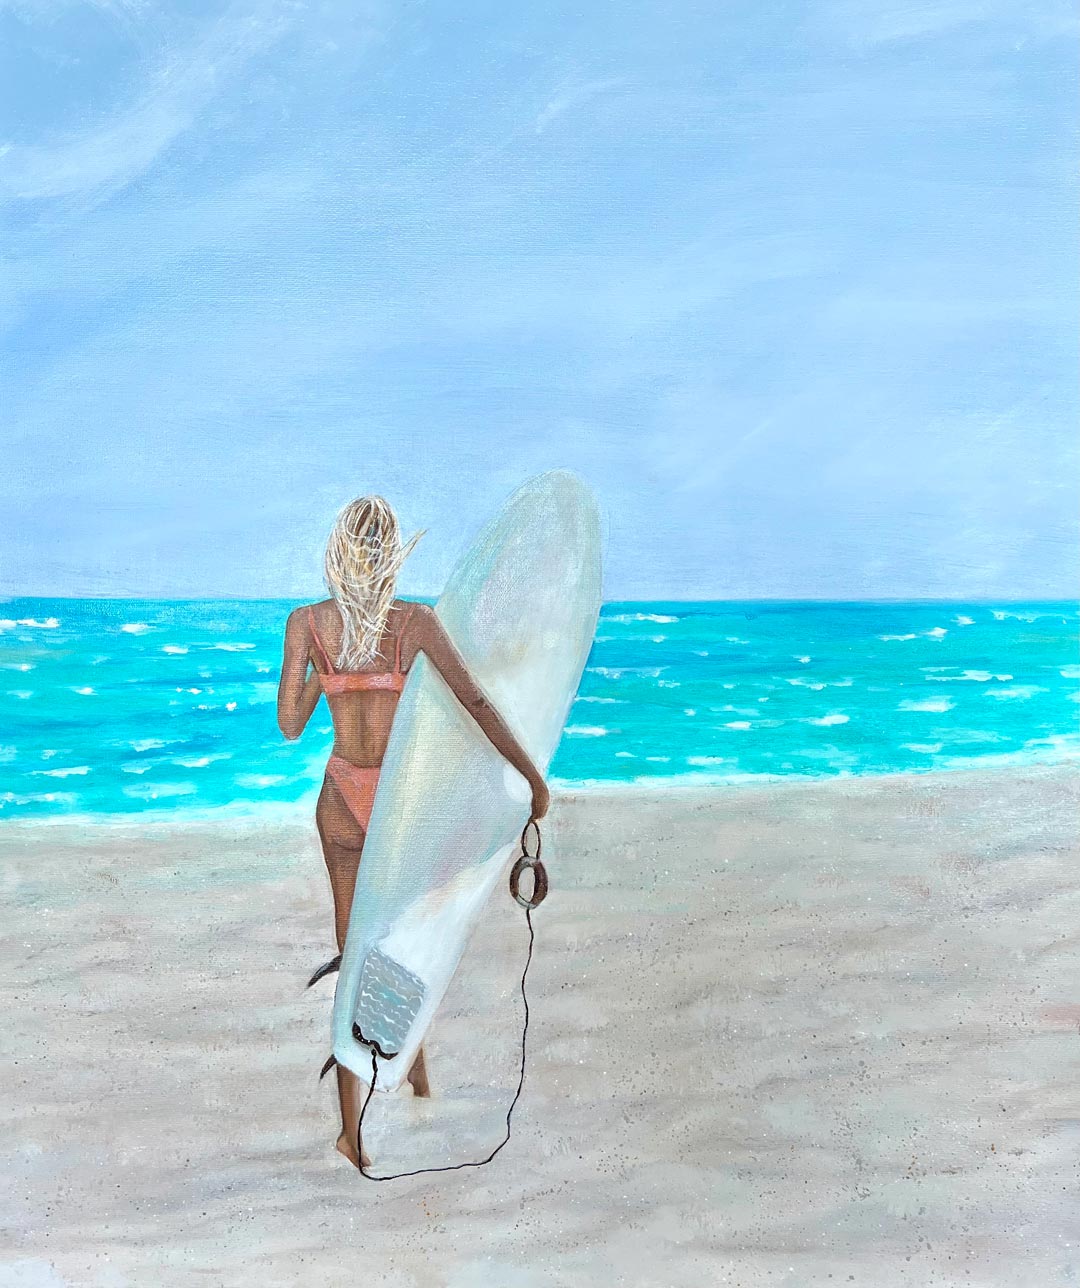 Buy painting online Singapore Exquisite Art Olga Mortensen Surfer